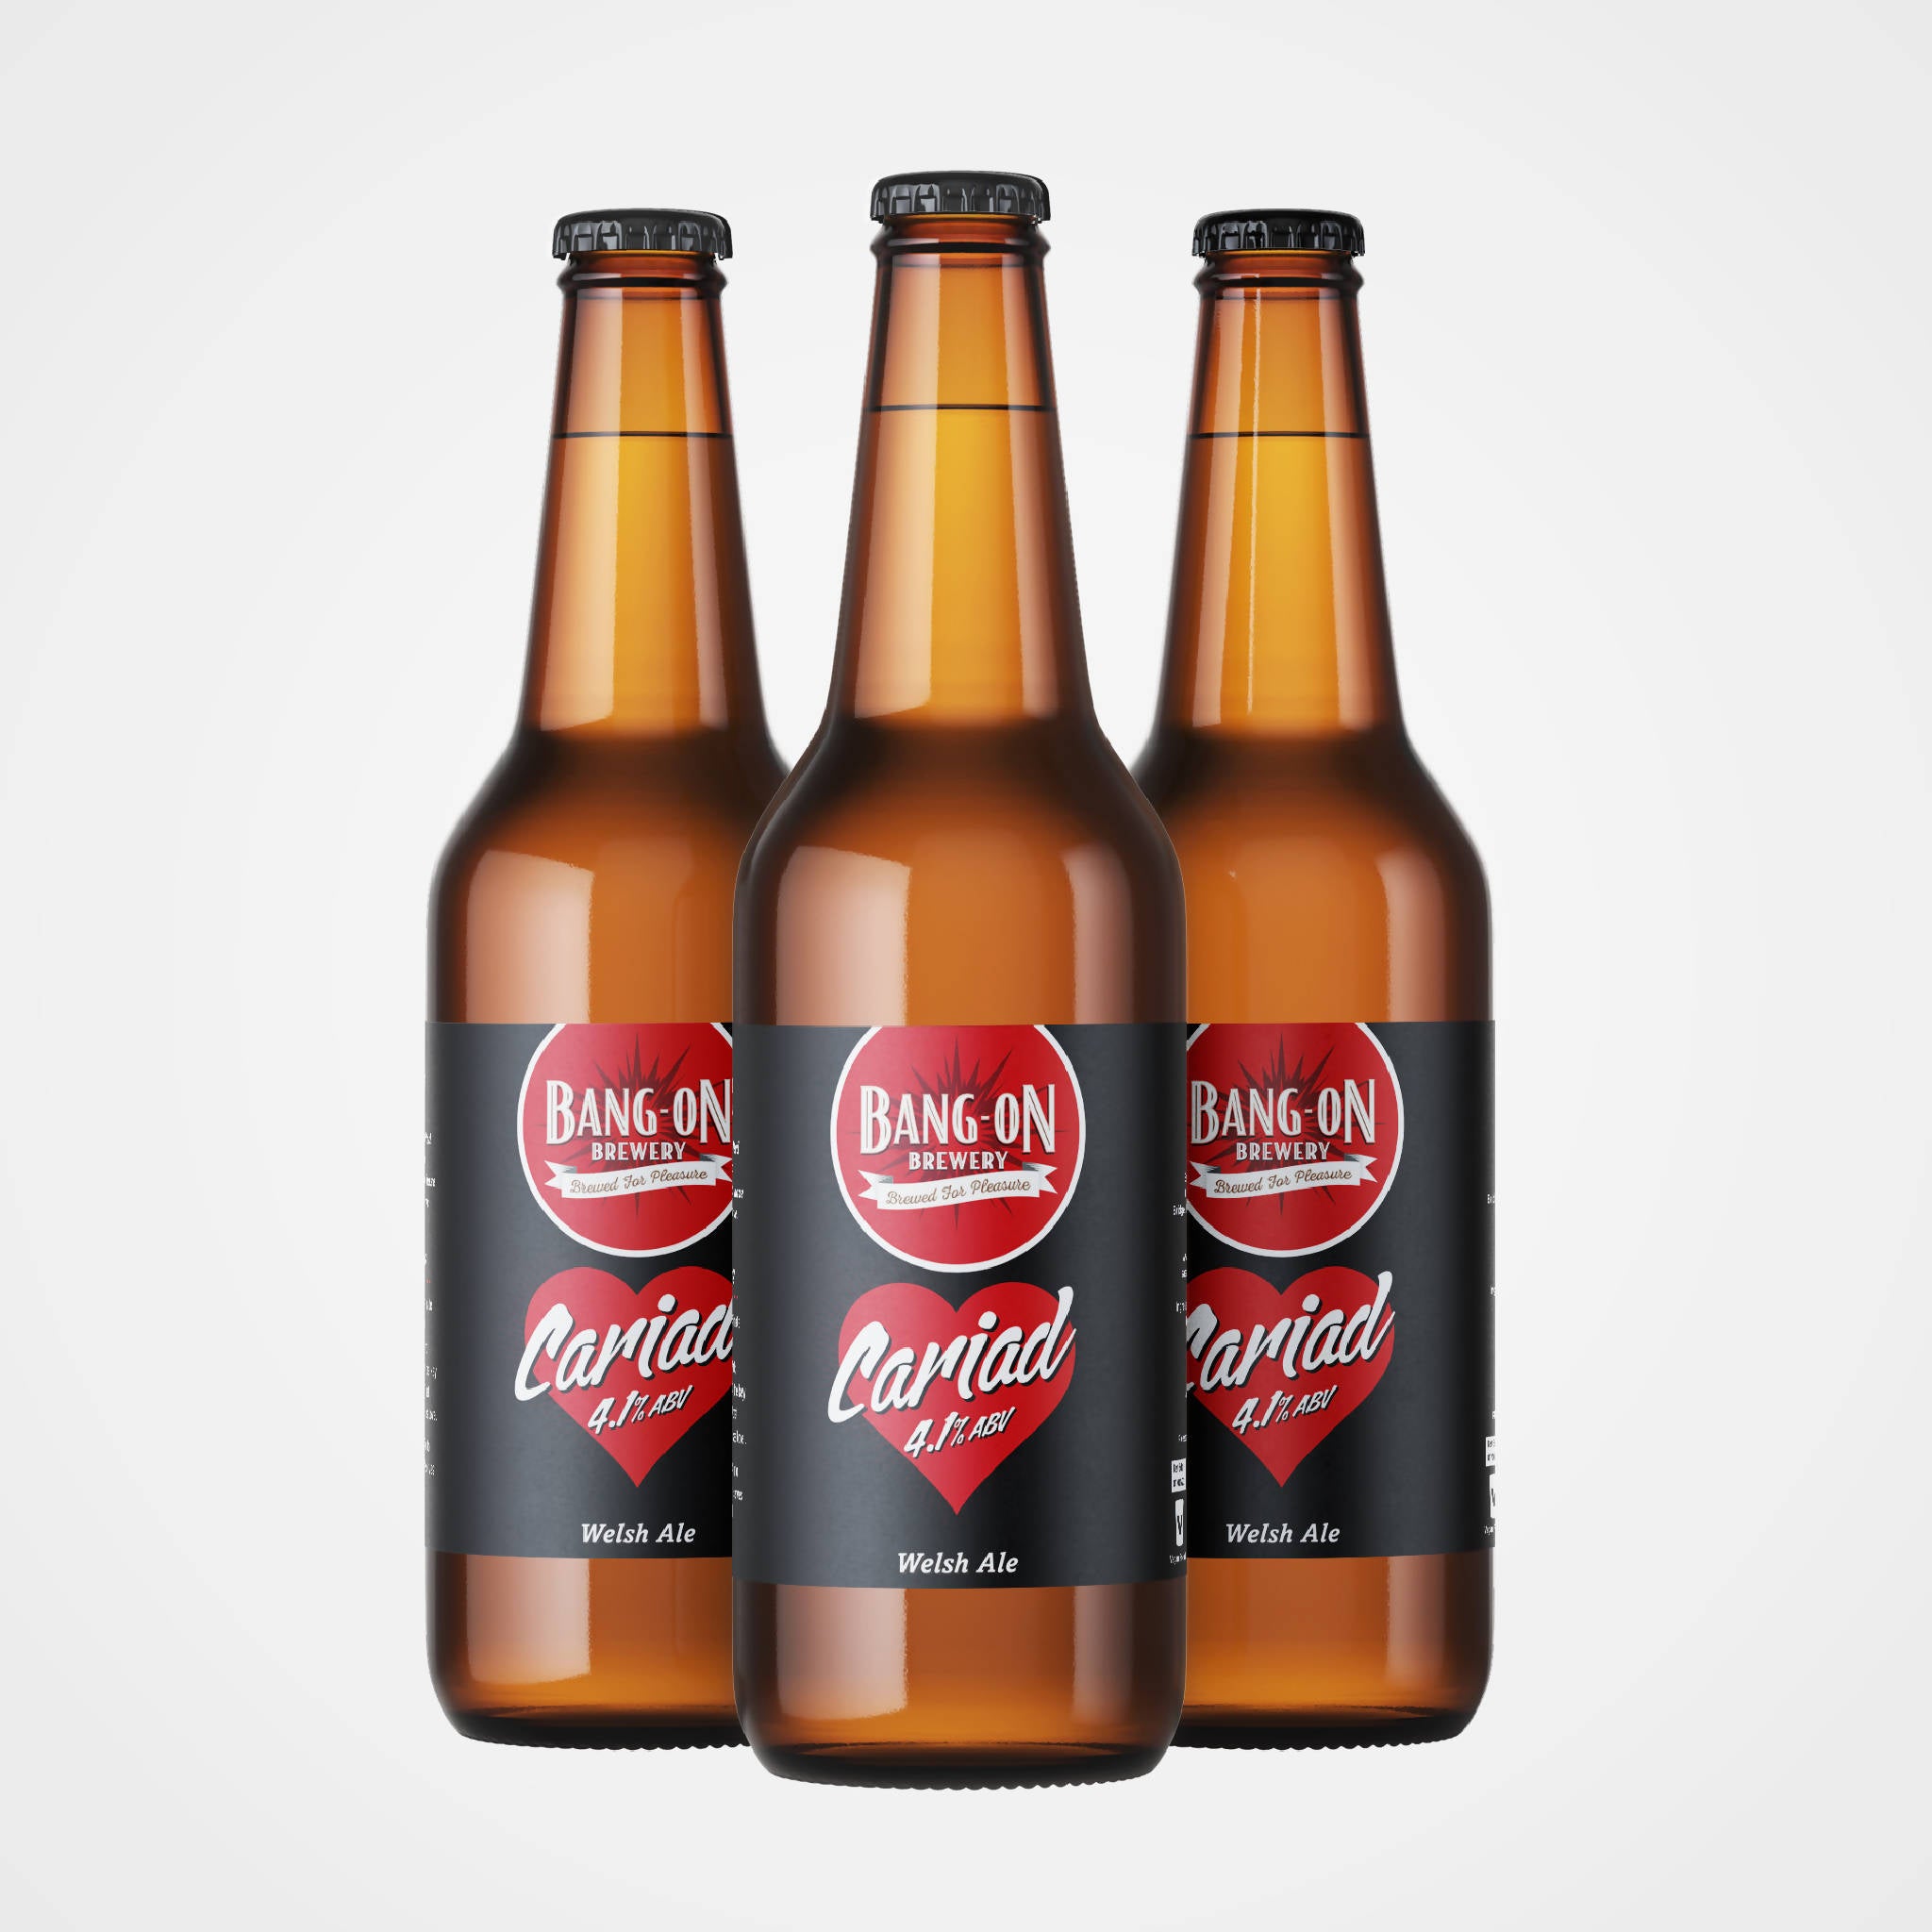 Cariad - Welsh Ale 4.1% ABV (500ml) - 6 Pack